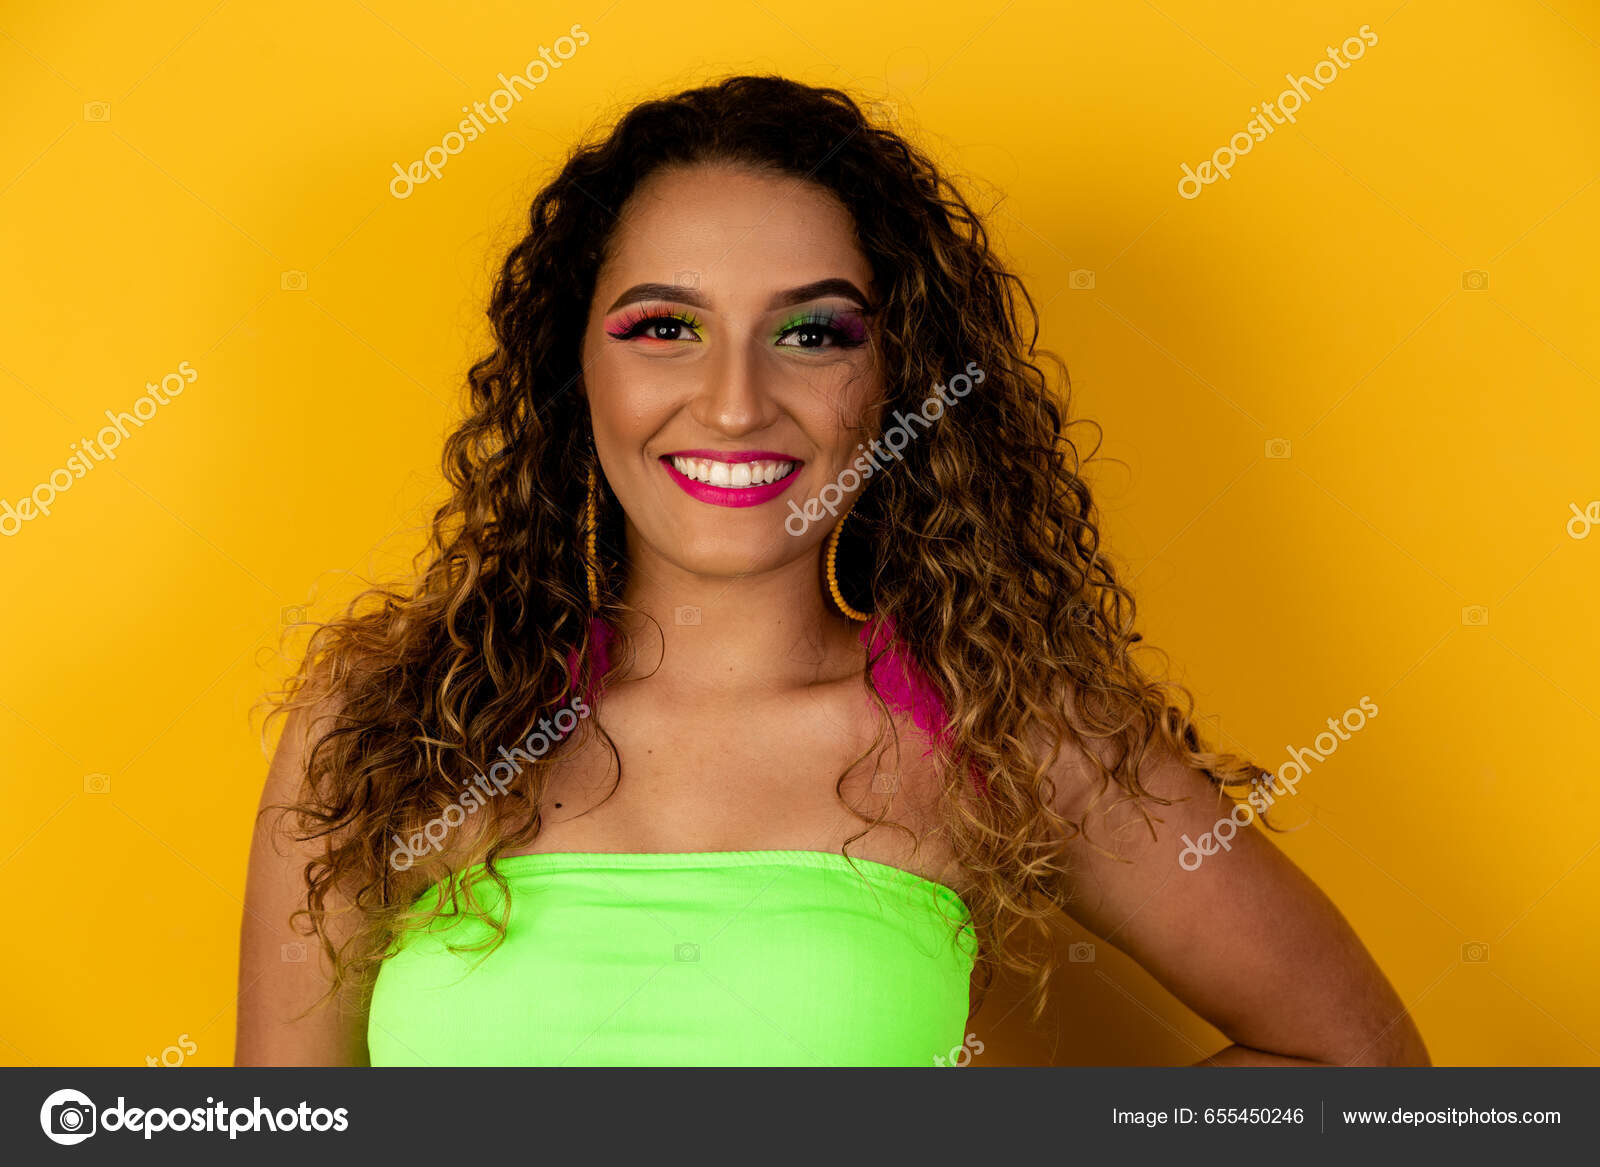 brasileiro vestindo fantasia de samba. linda mulher brasileira